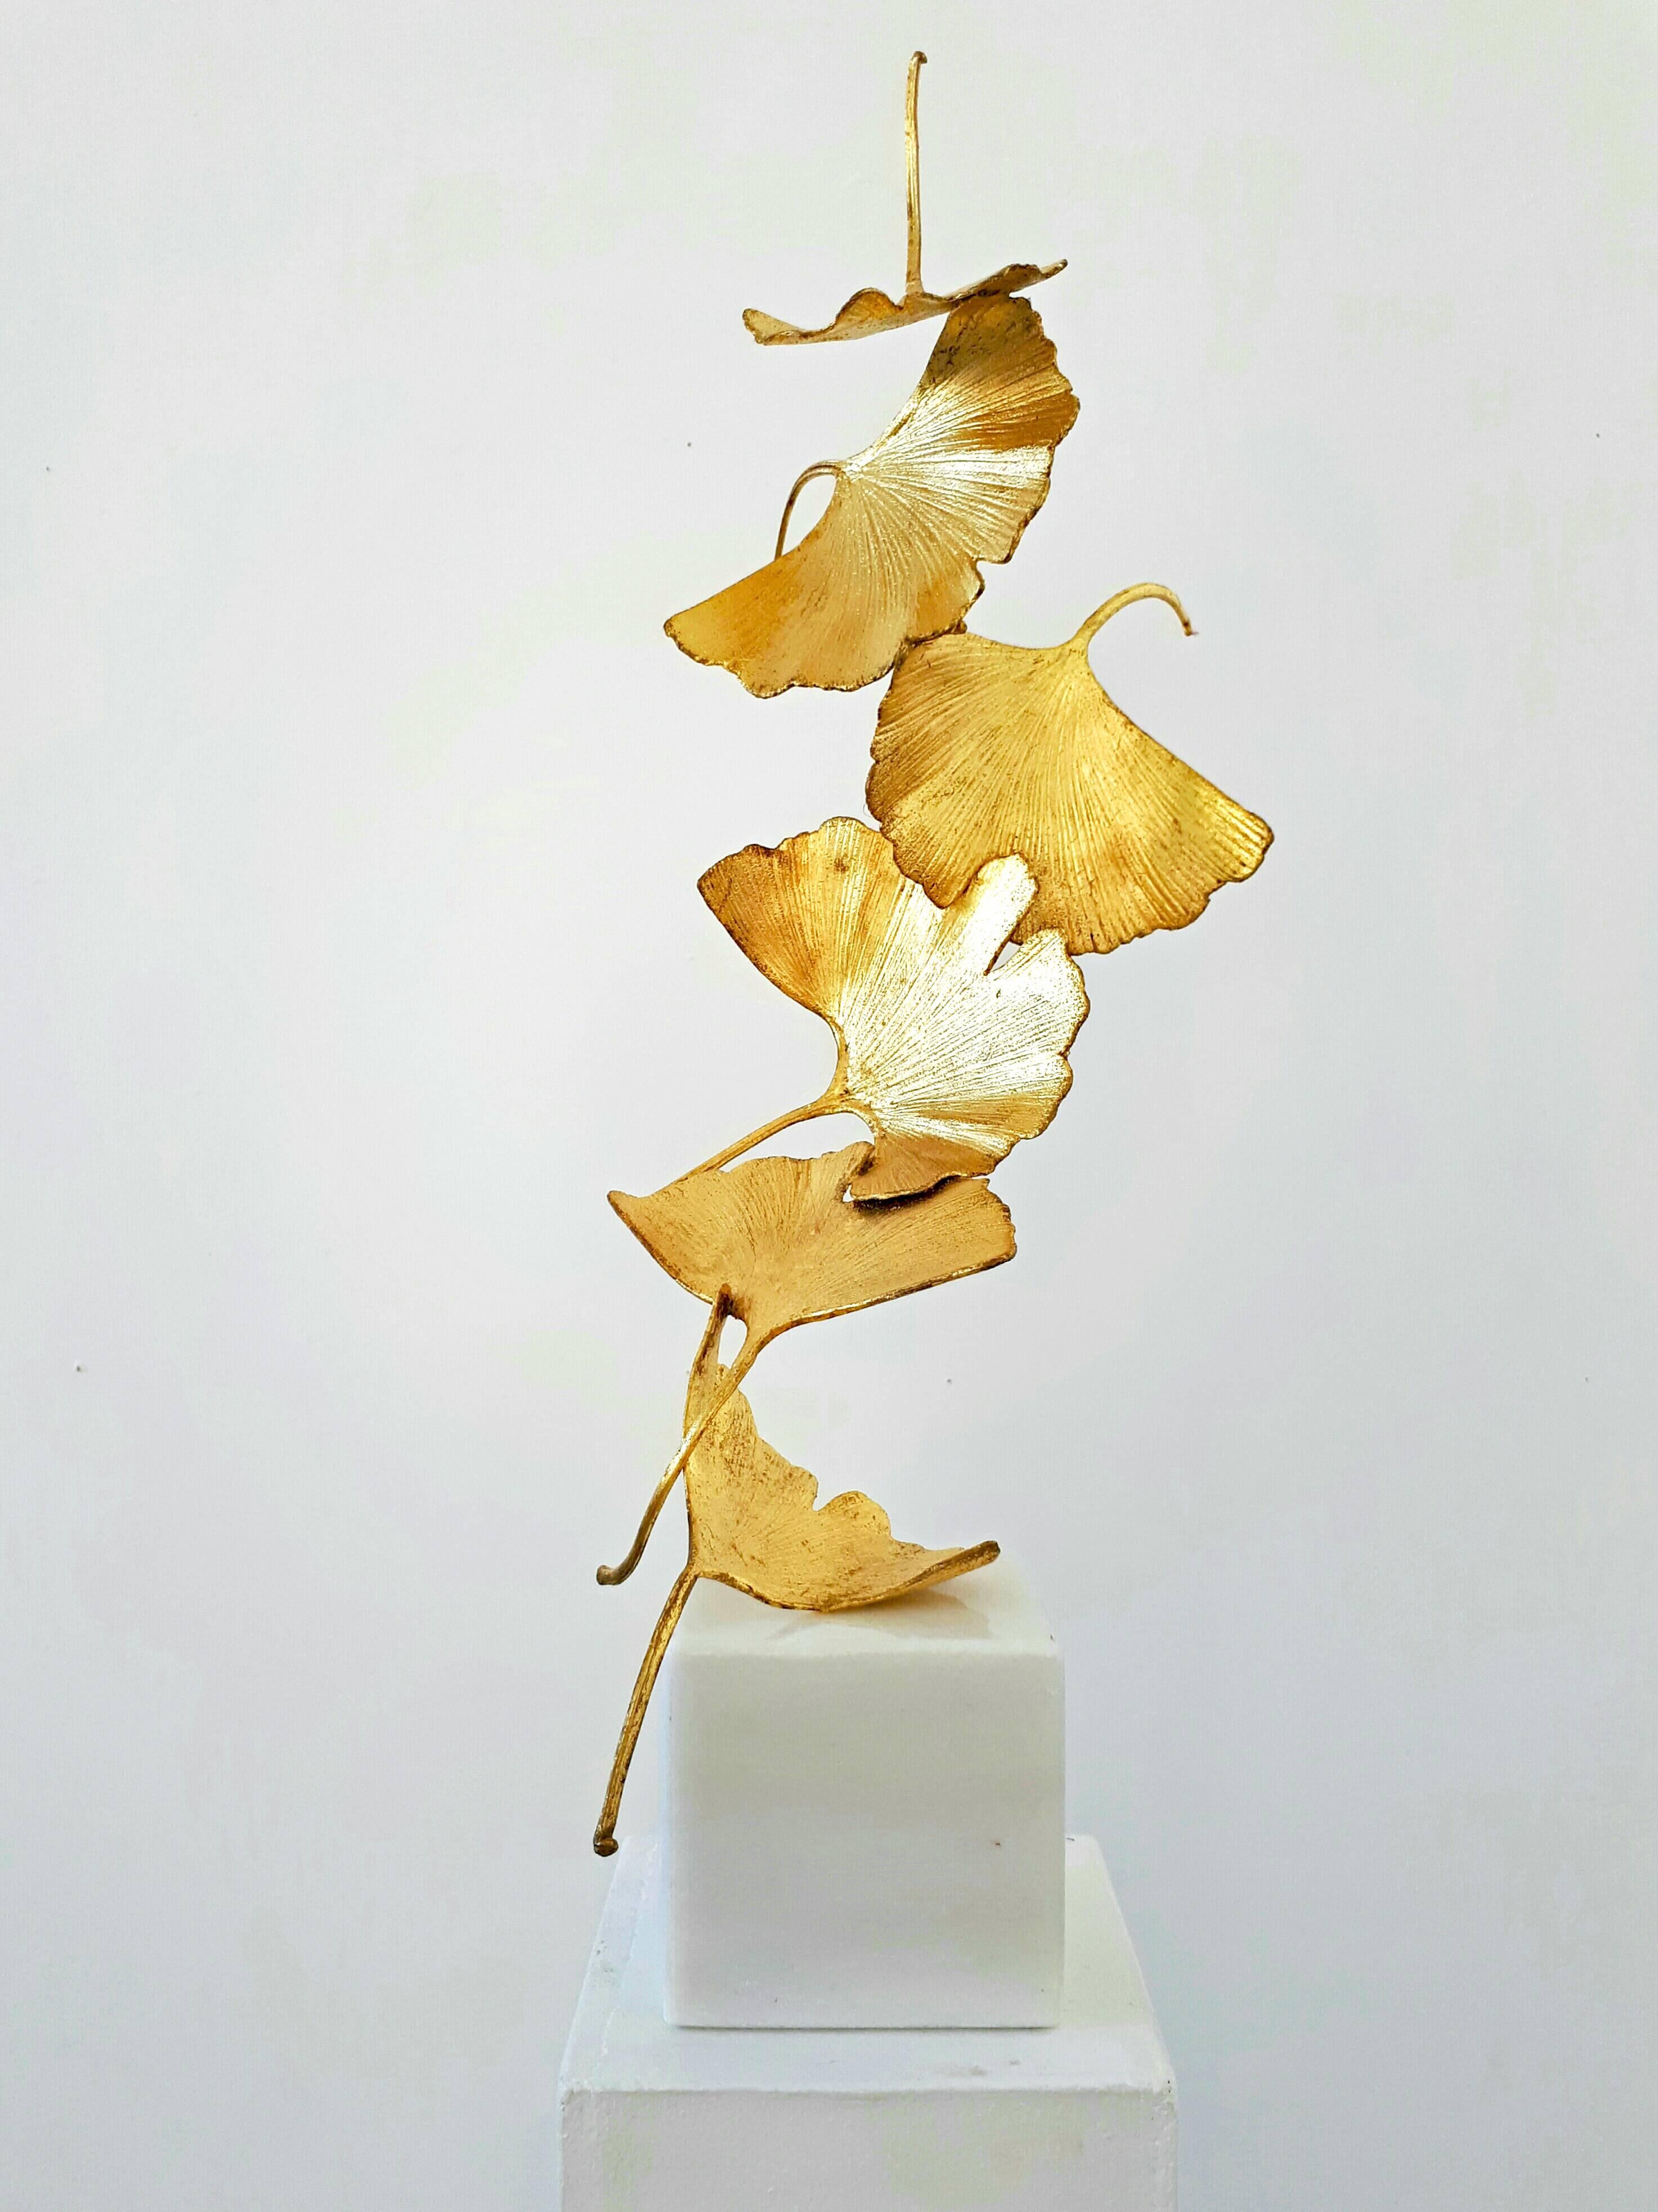 7 Golden Gingko Leaves - Cast Brass golden sculpture on white marble base - Sculpture by Kuno Vollet